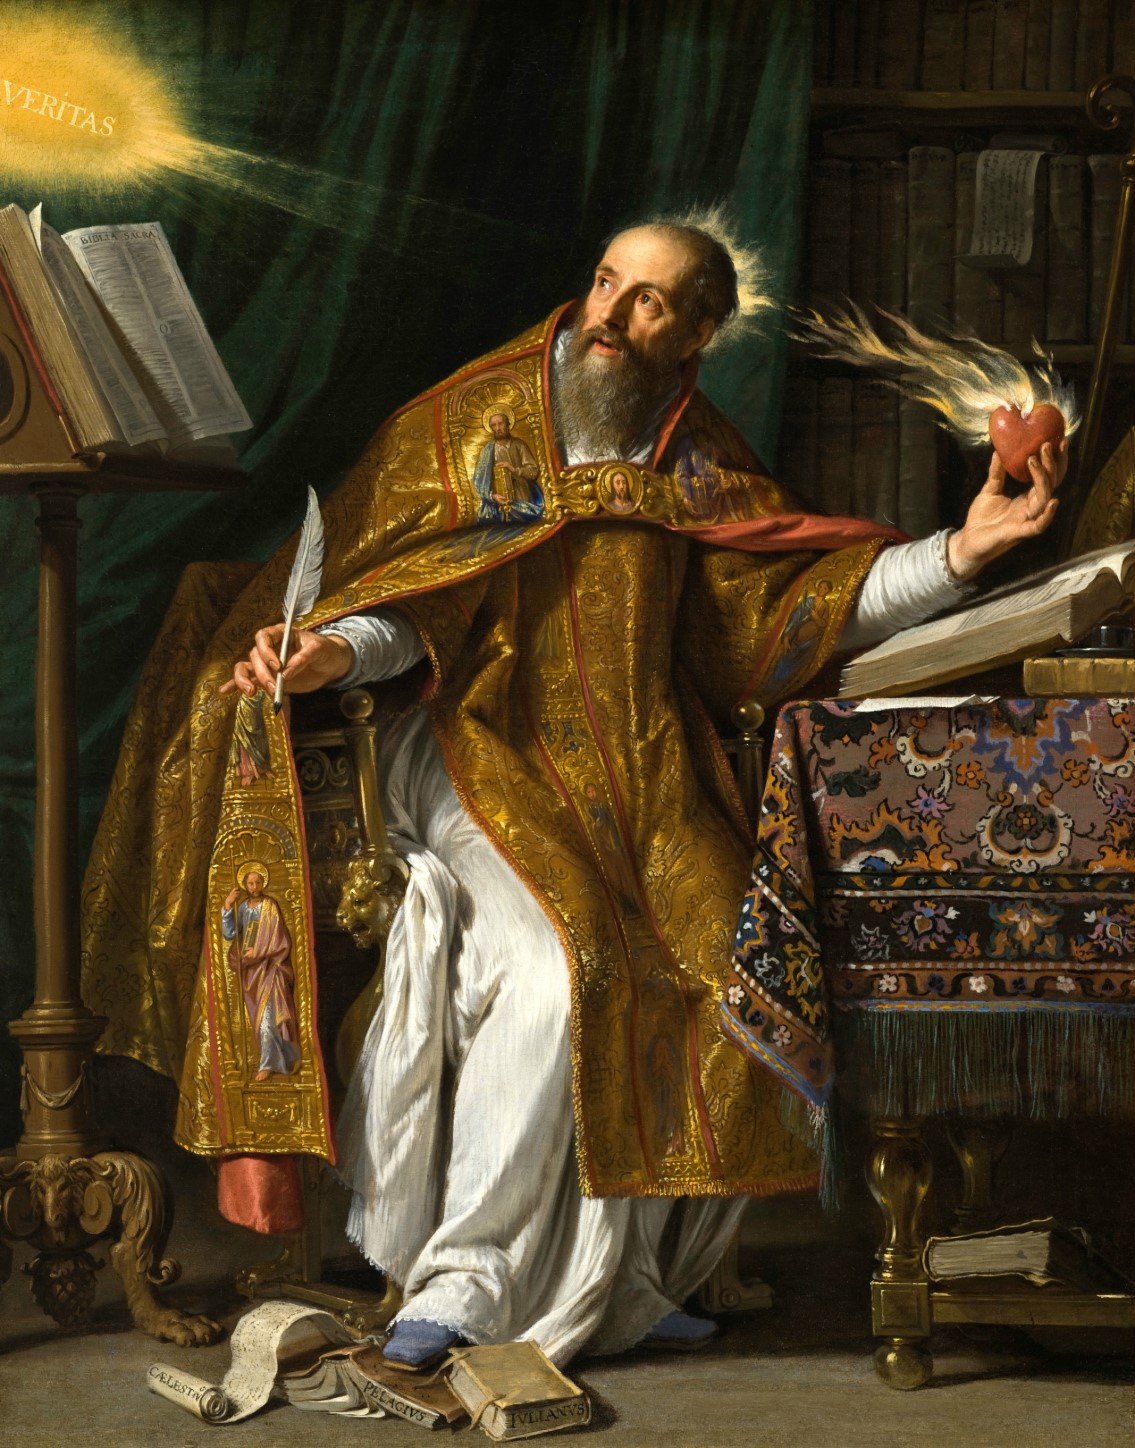 https://commons.wikimedia.org/wiki/File:Saint_Augustine_by_Philippe_de_Champaigne.jpg